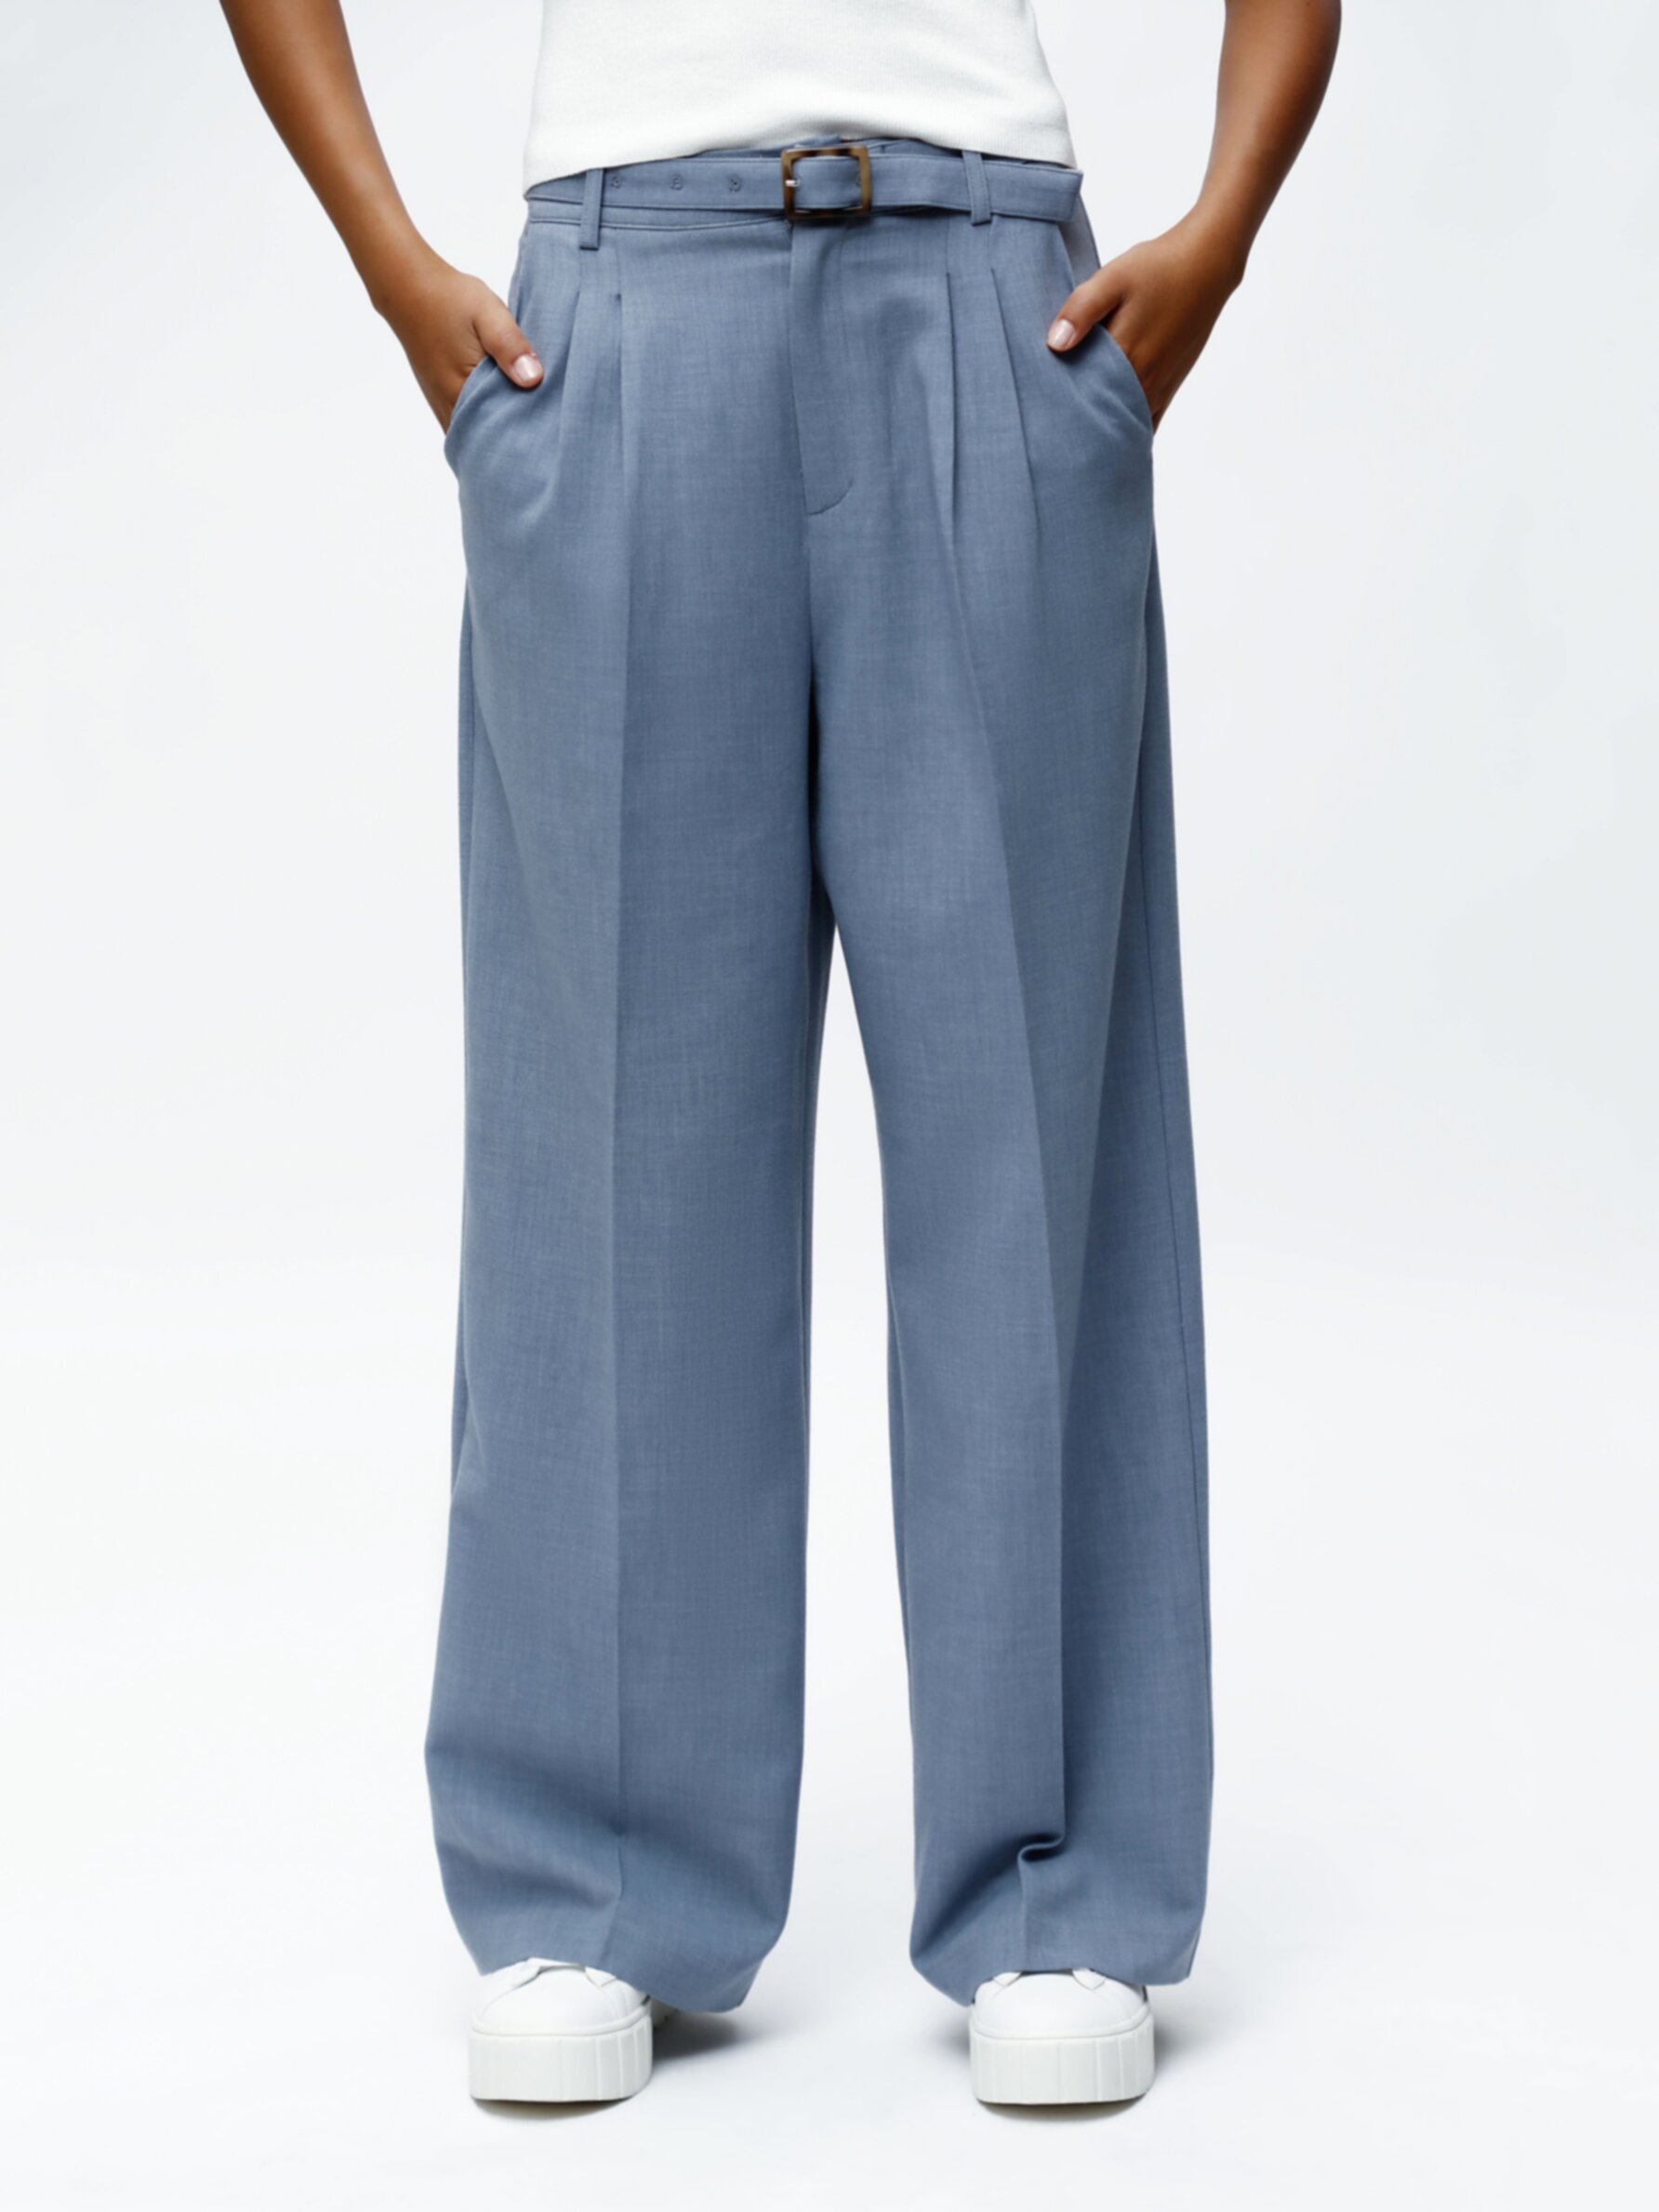 Pantalón wide leg - Pantalones Vestir - Pantalones - ROPA - Mujer